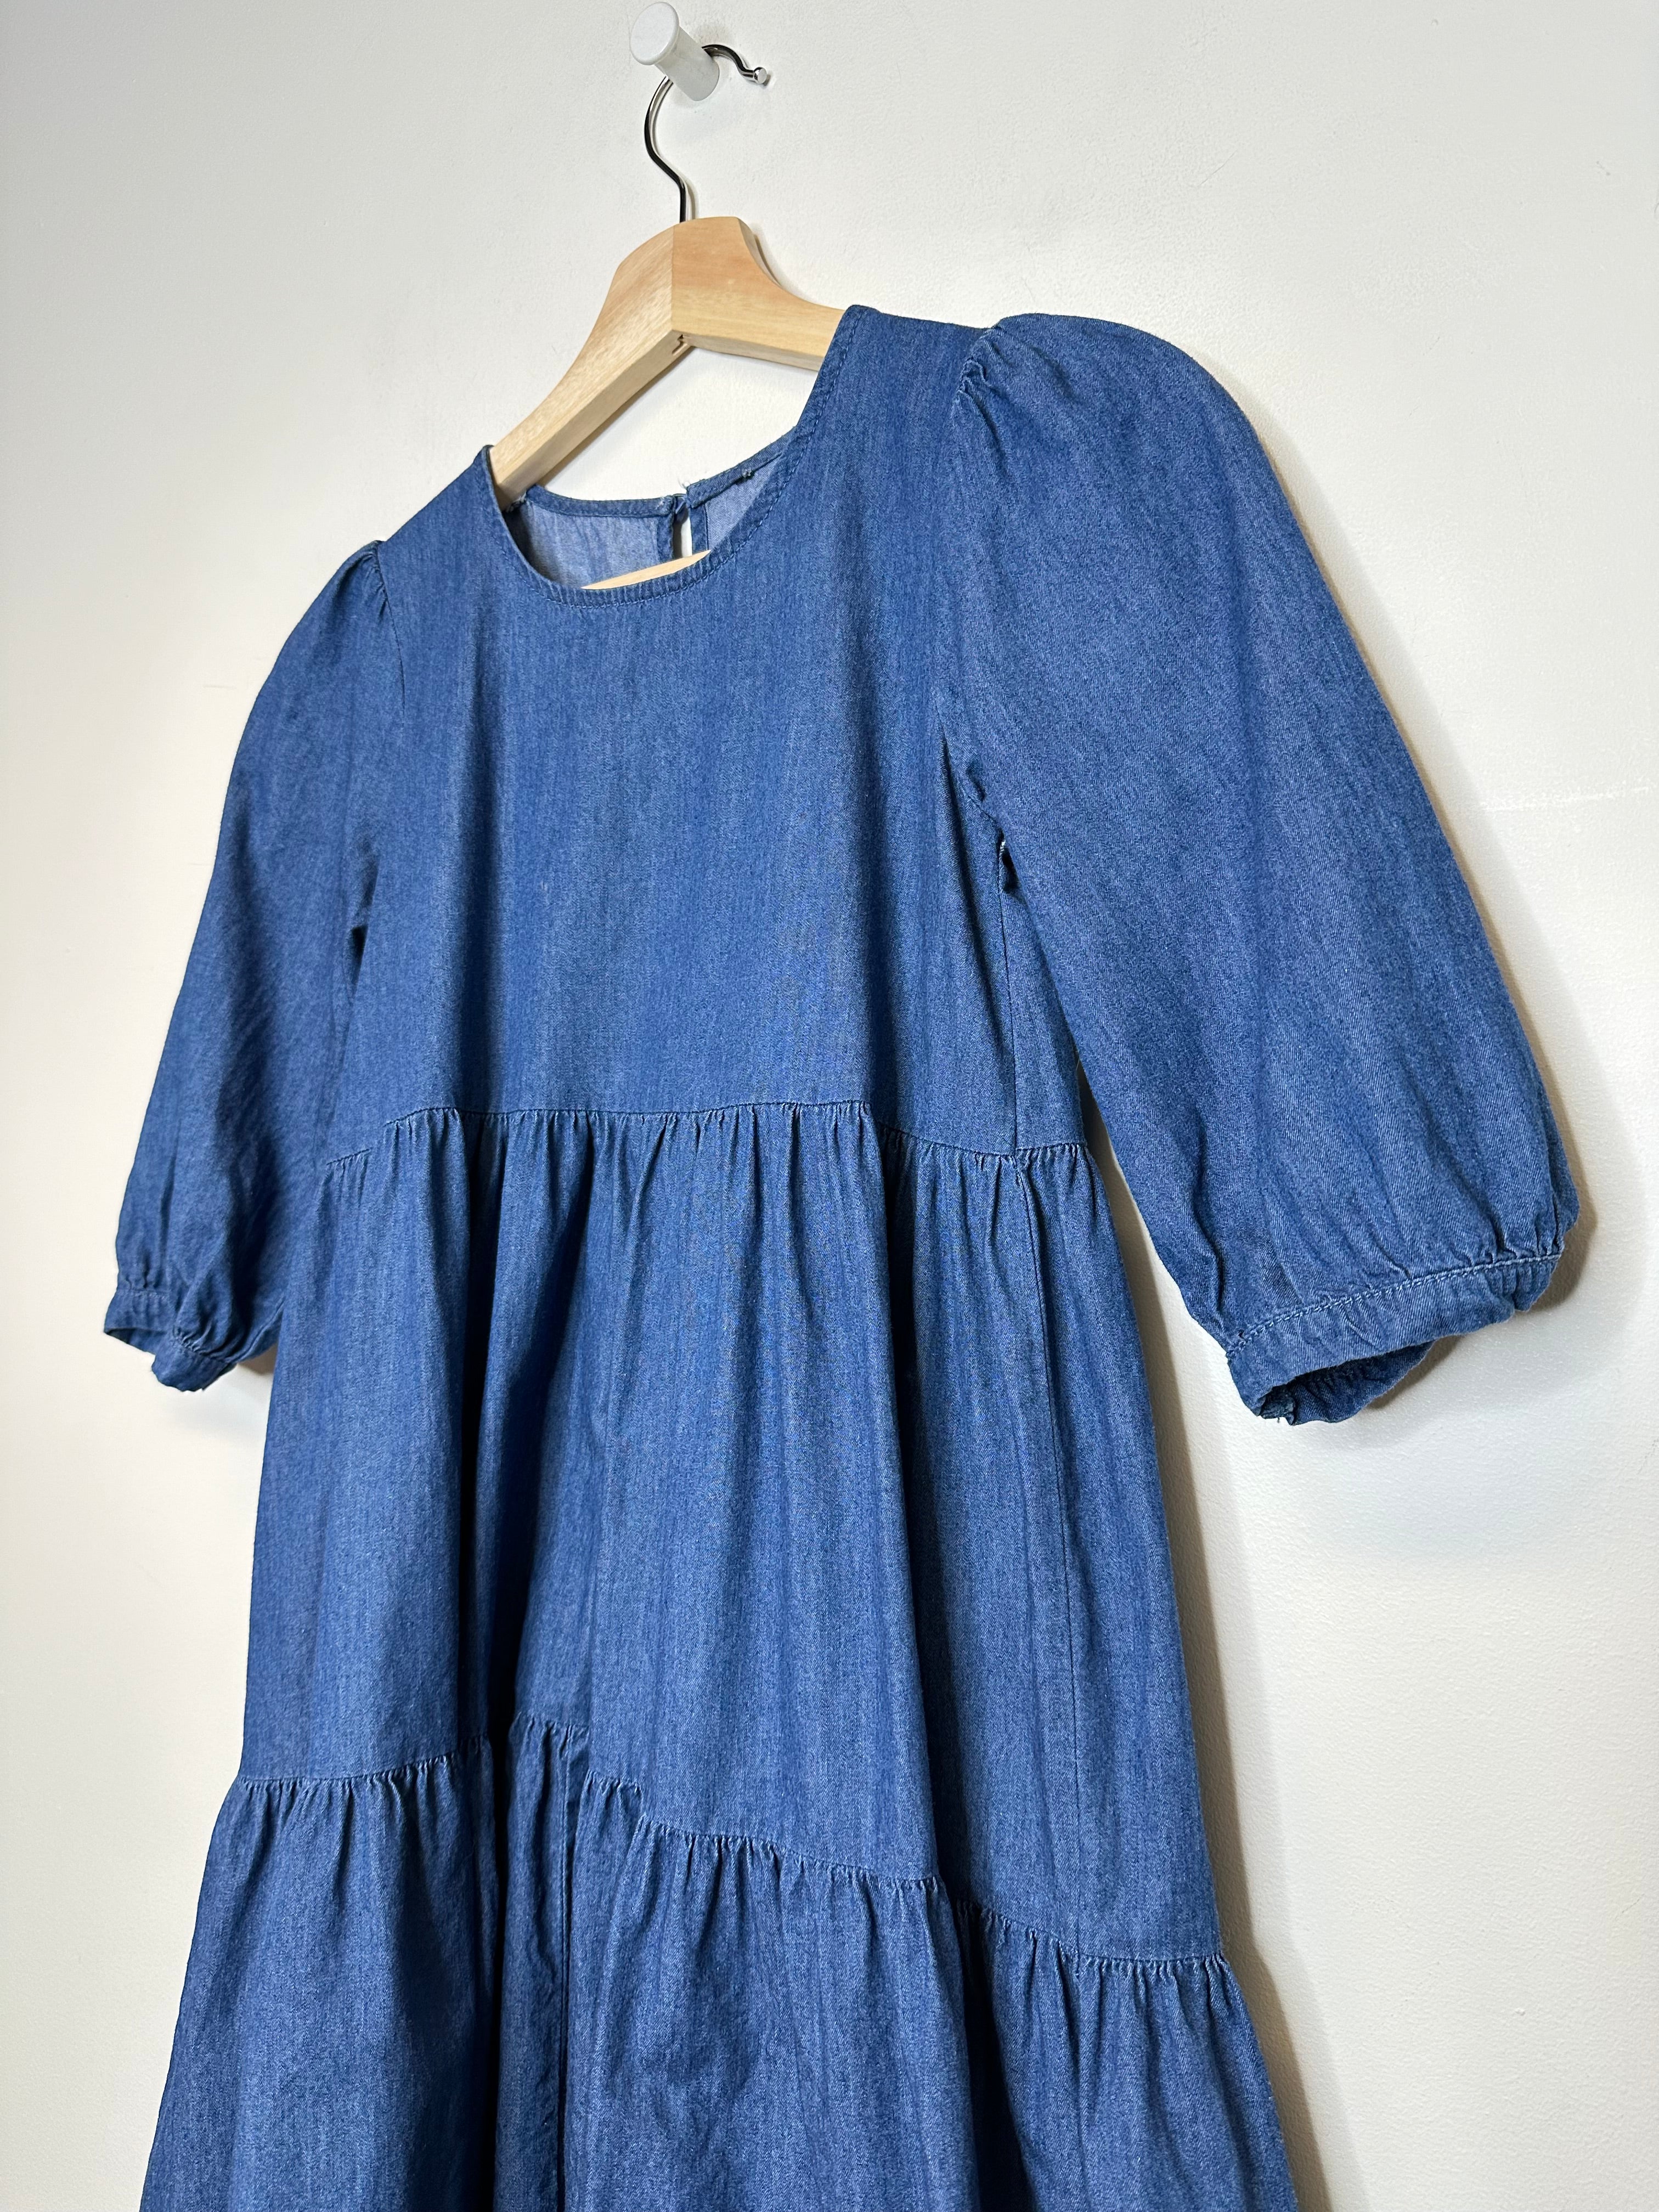 Dark Blue Denim Tiered Dress - XS